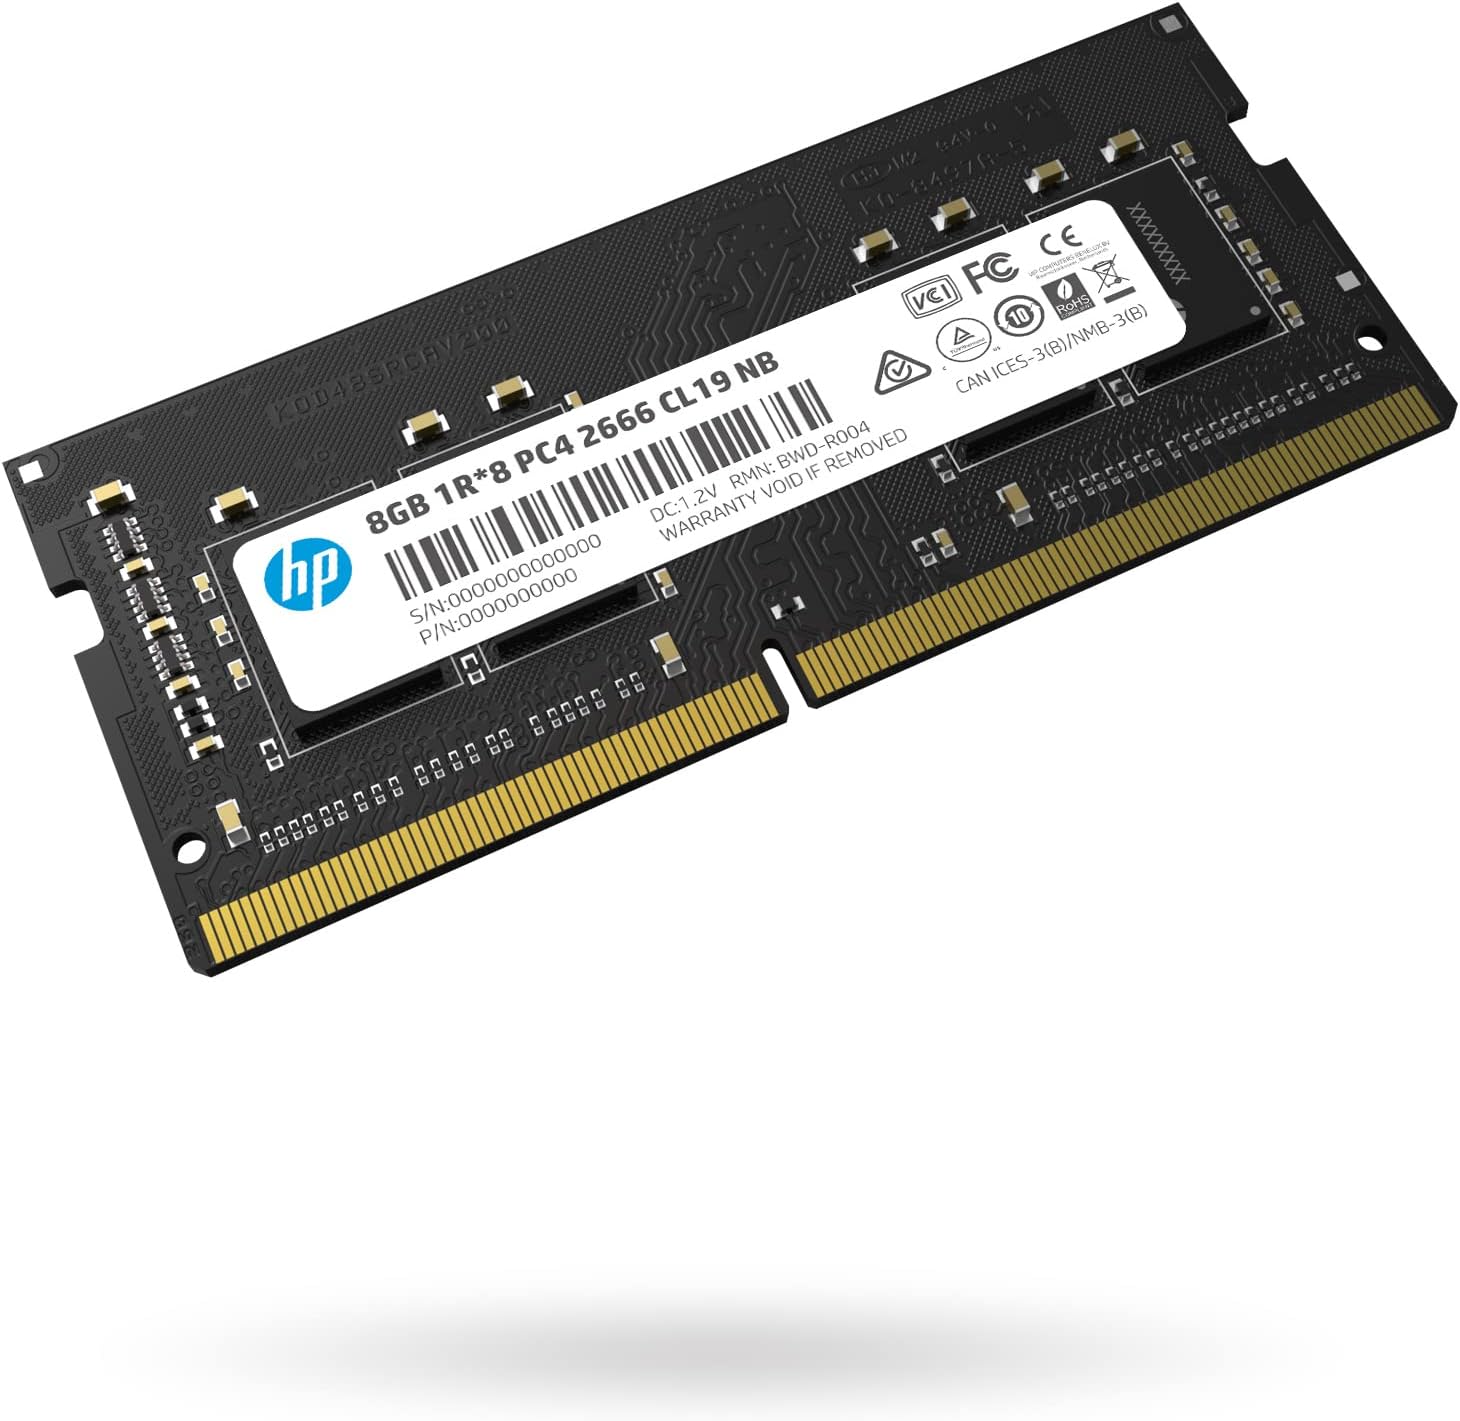 HP S1 Single RAM 8GB DDR4 2666MHz CL19 Laptop Memory - [...]